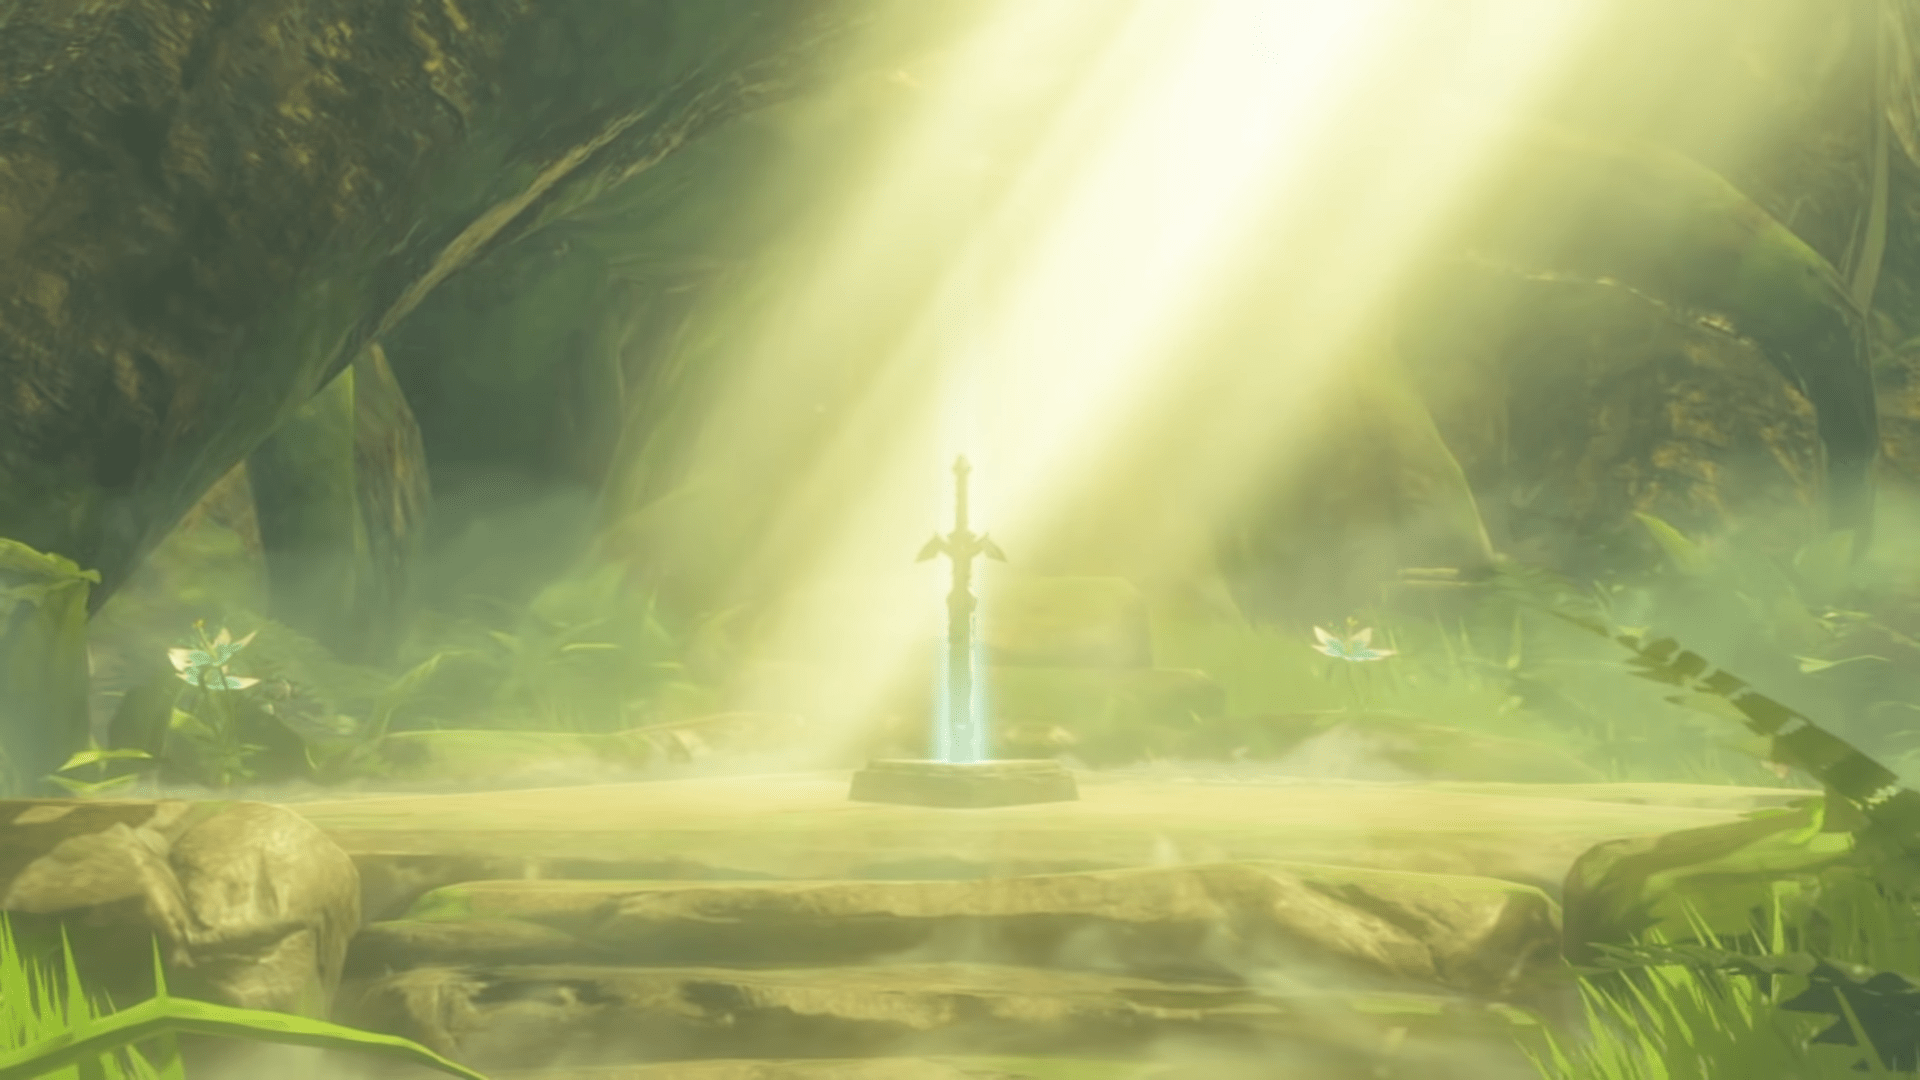 How To Get The Legendary Master Sword In The Legend Of Zelda: Breath Of The Wild